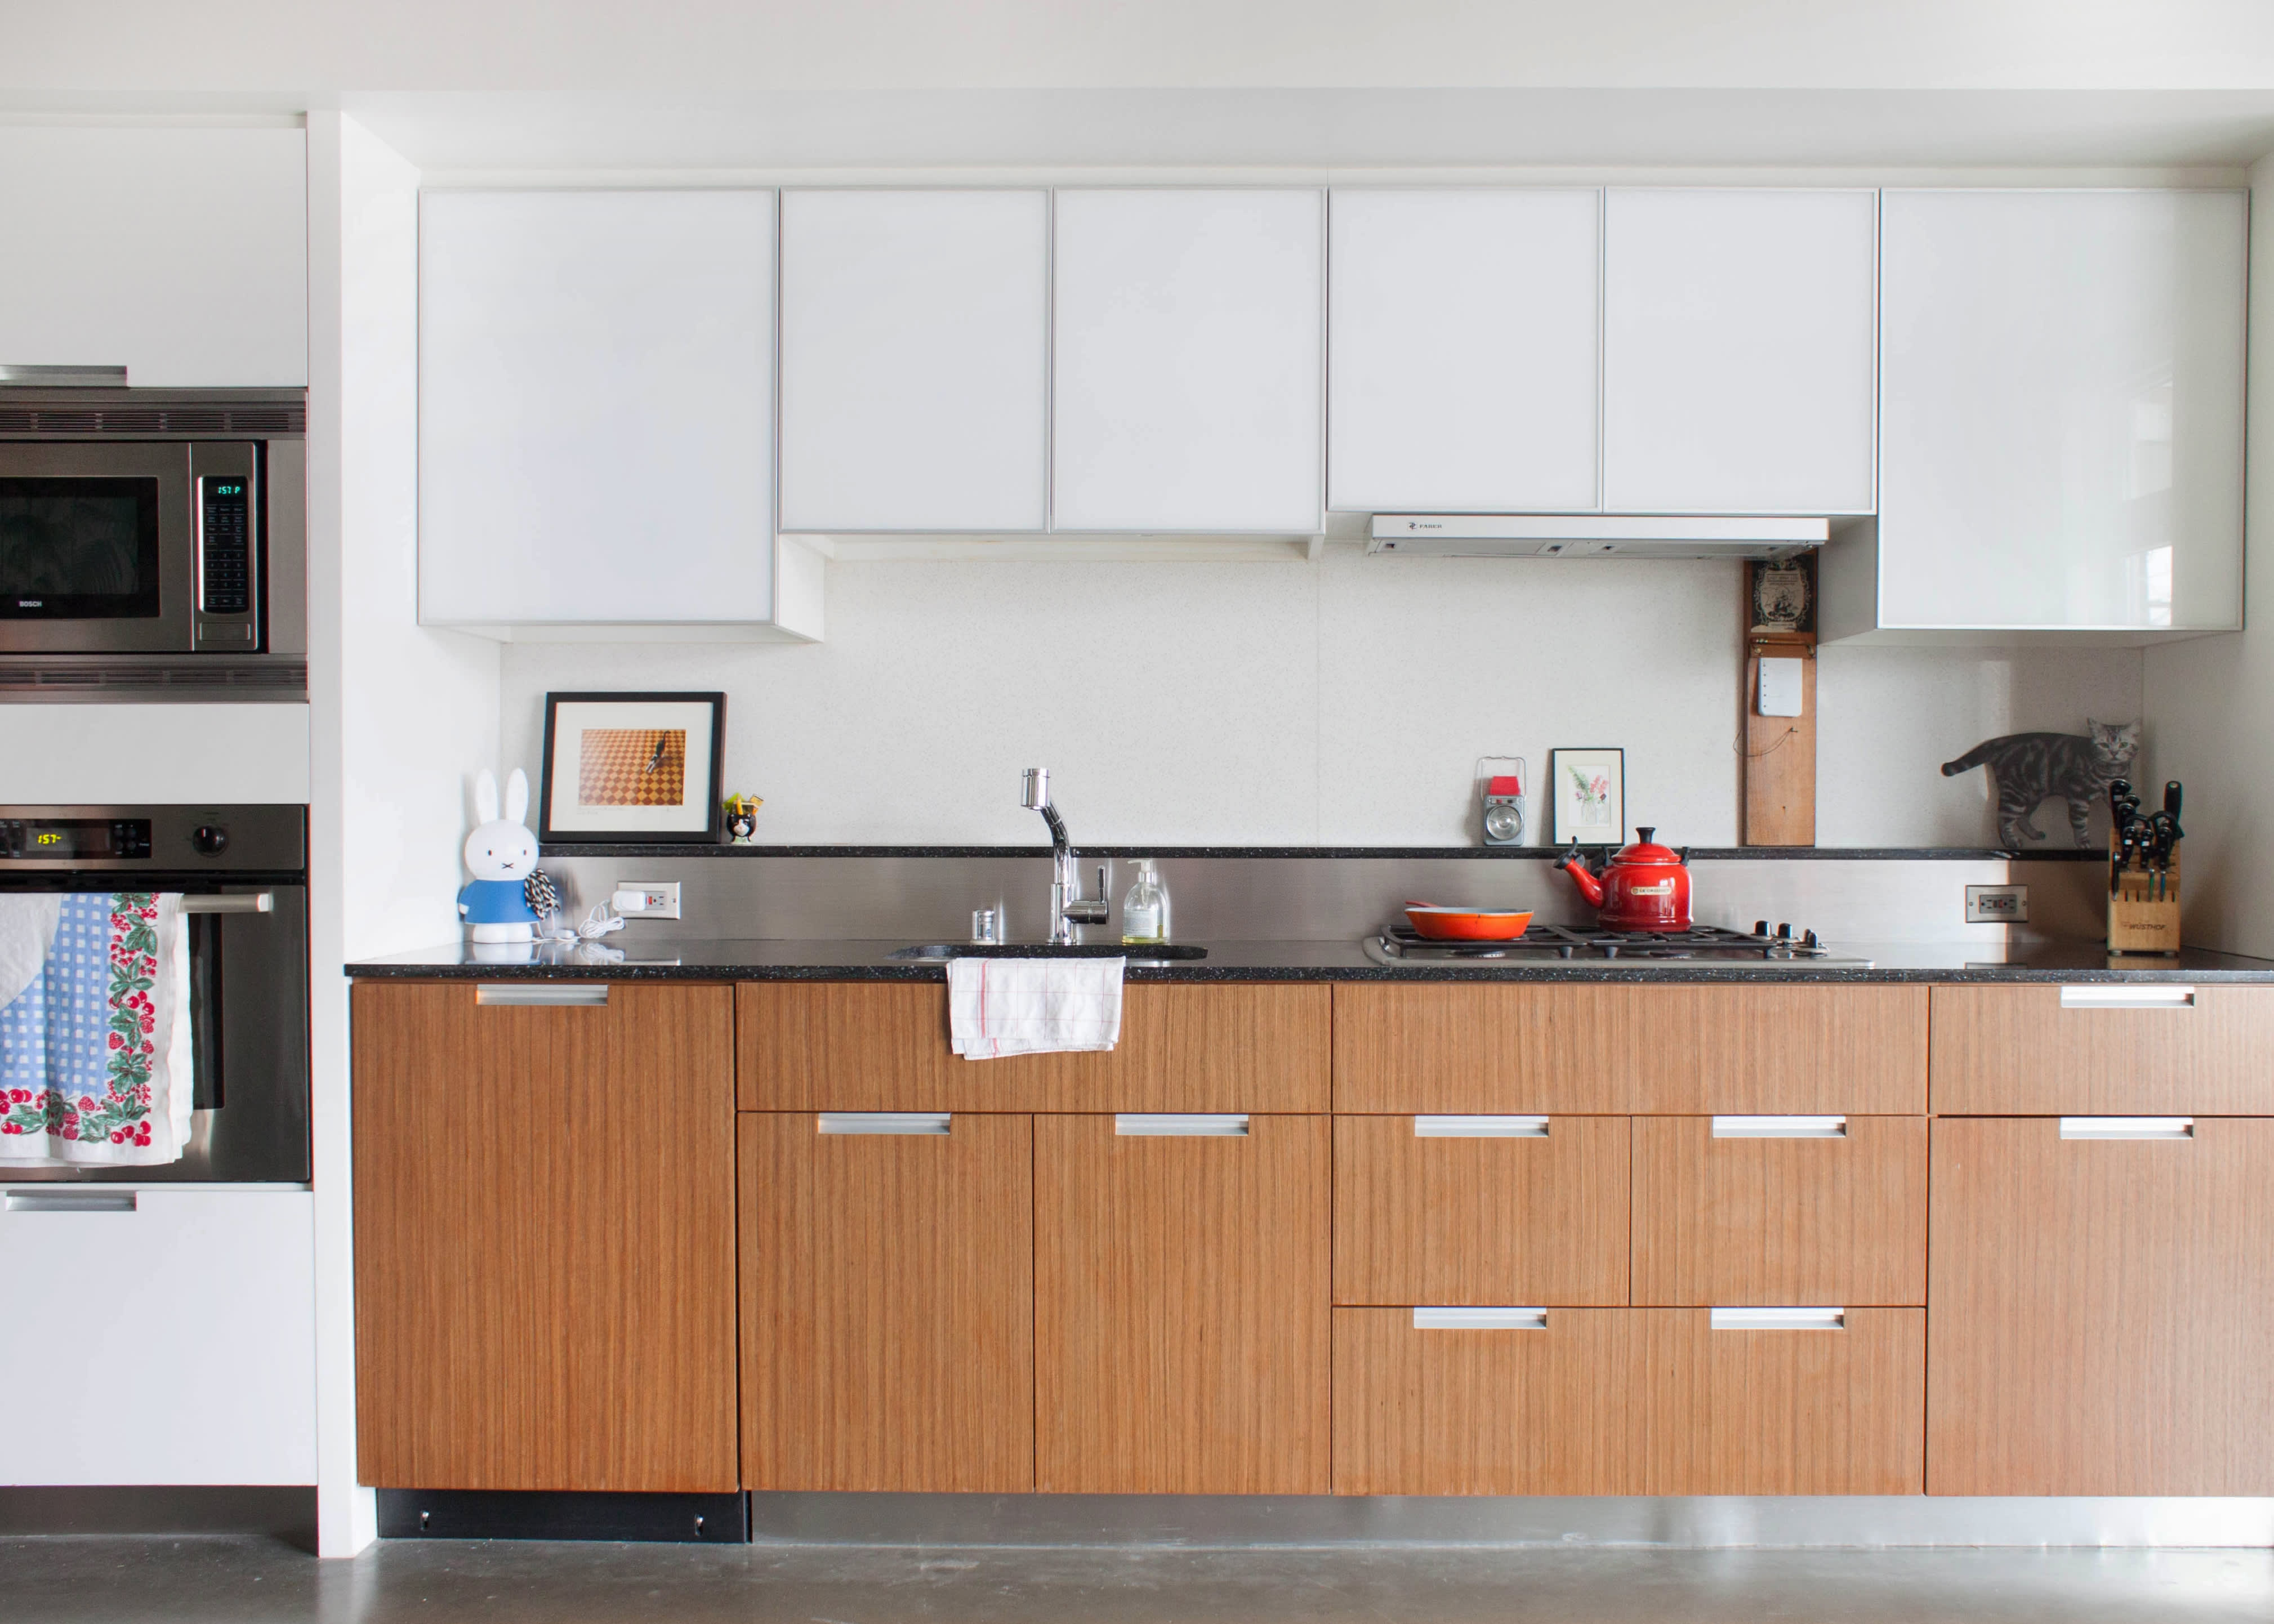 2023 New Kitchen Shelf Home Countertop Dish Rack Draining